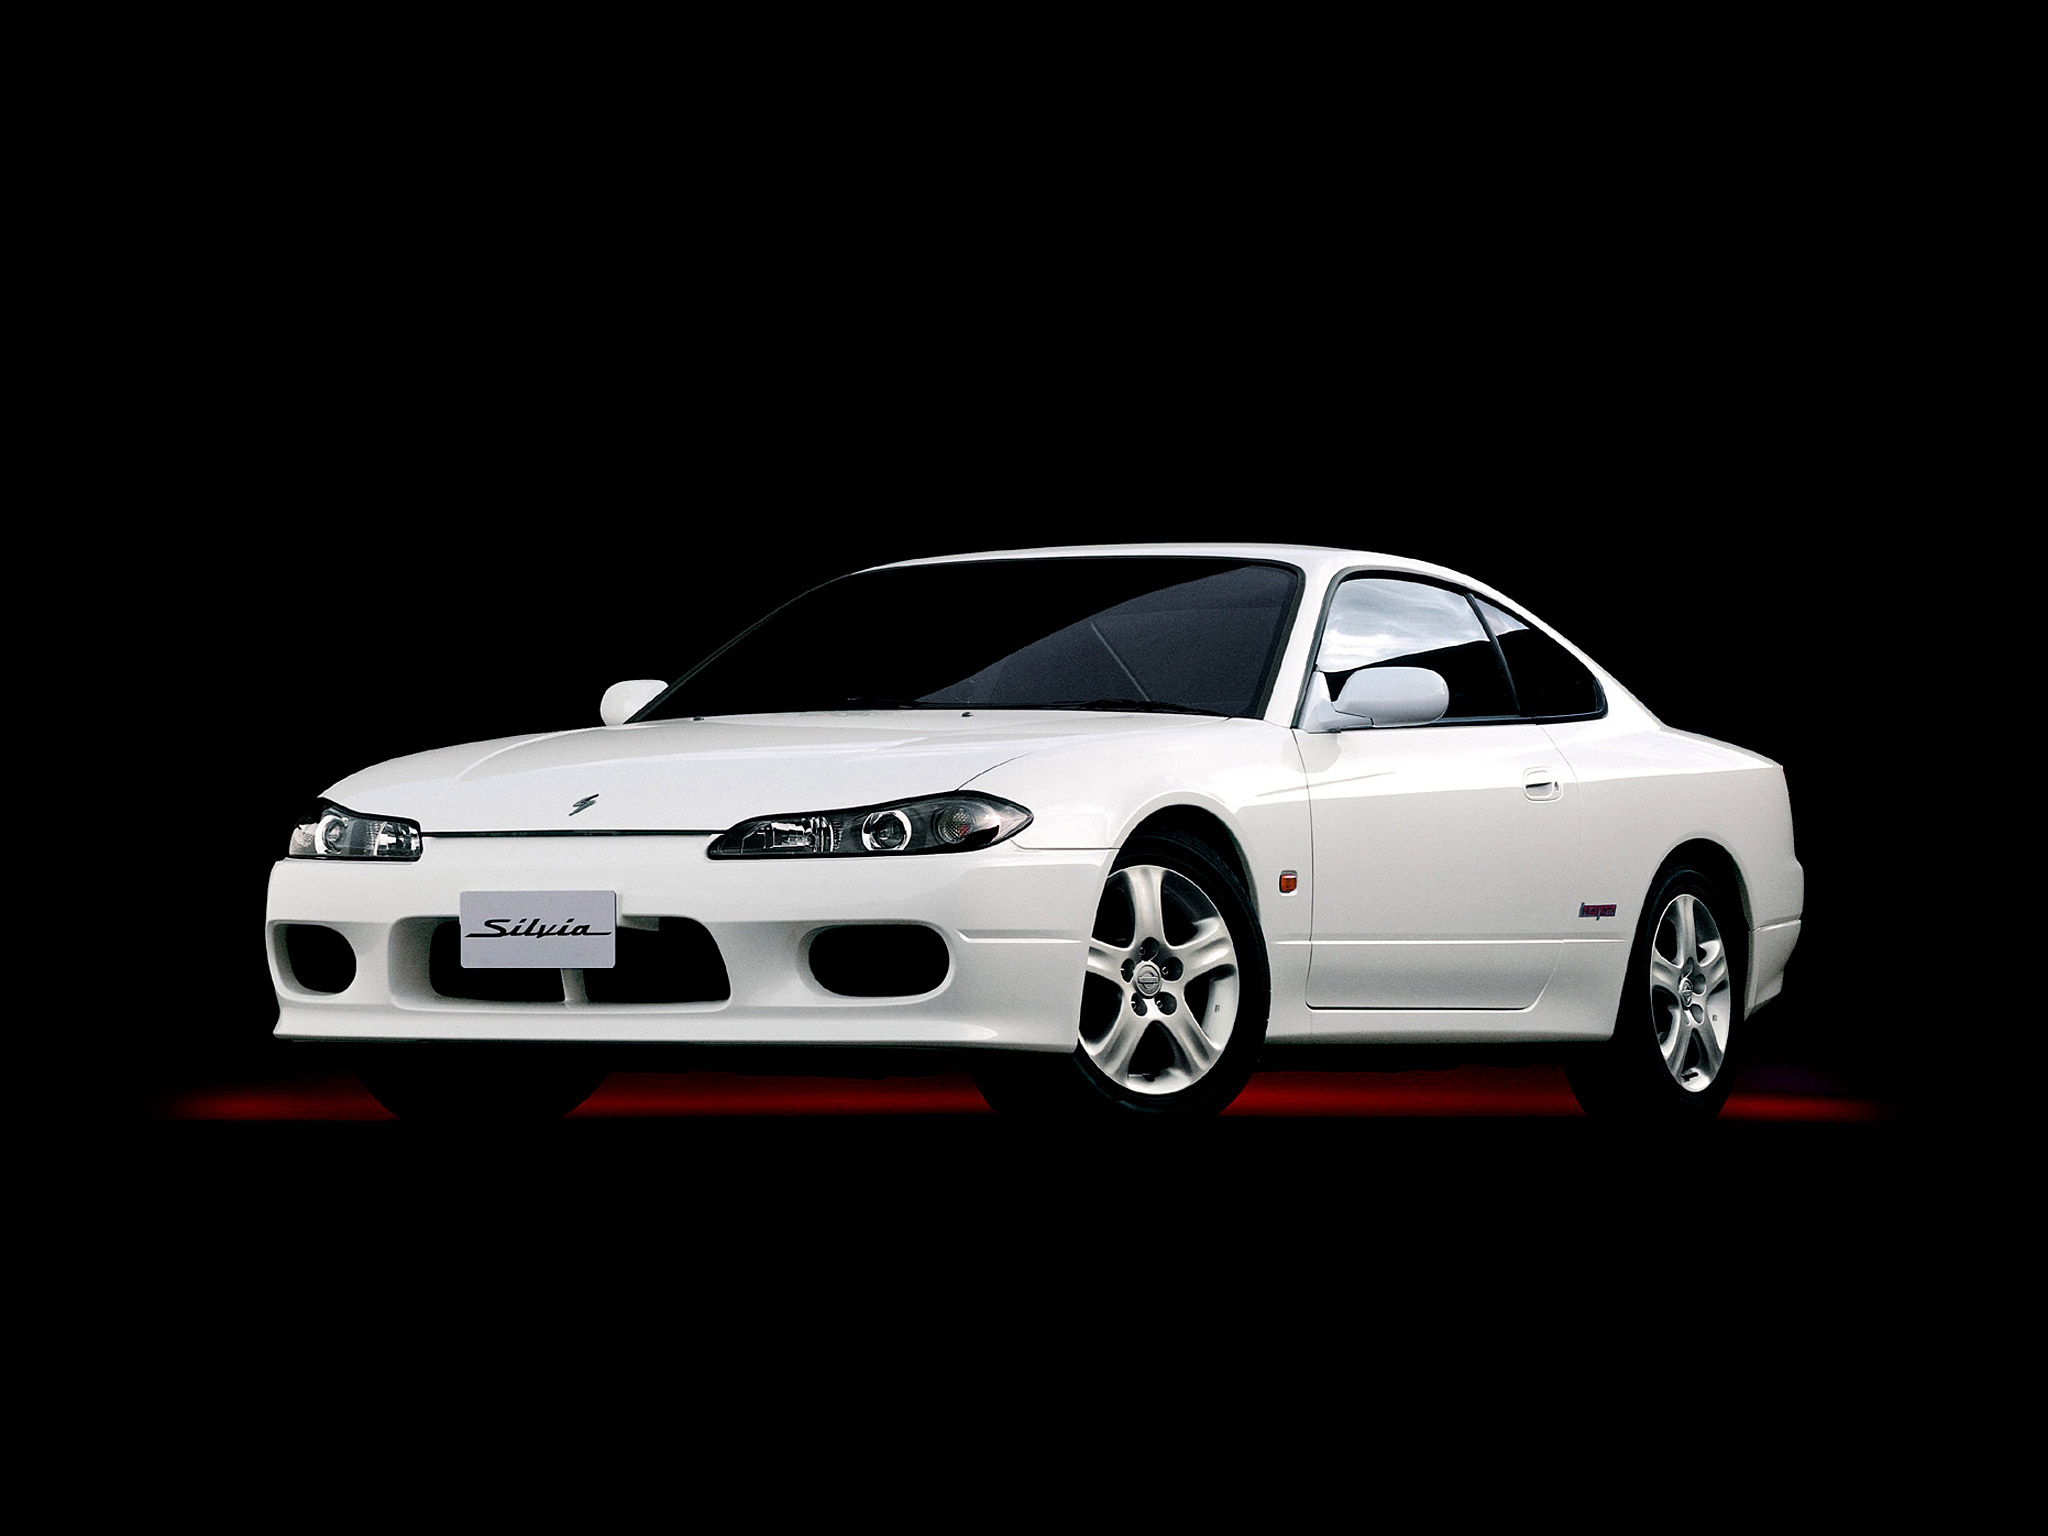  2000 Nissan Silvia Wallpaper.